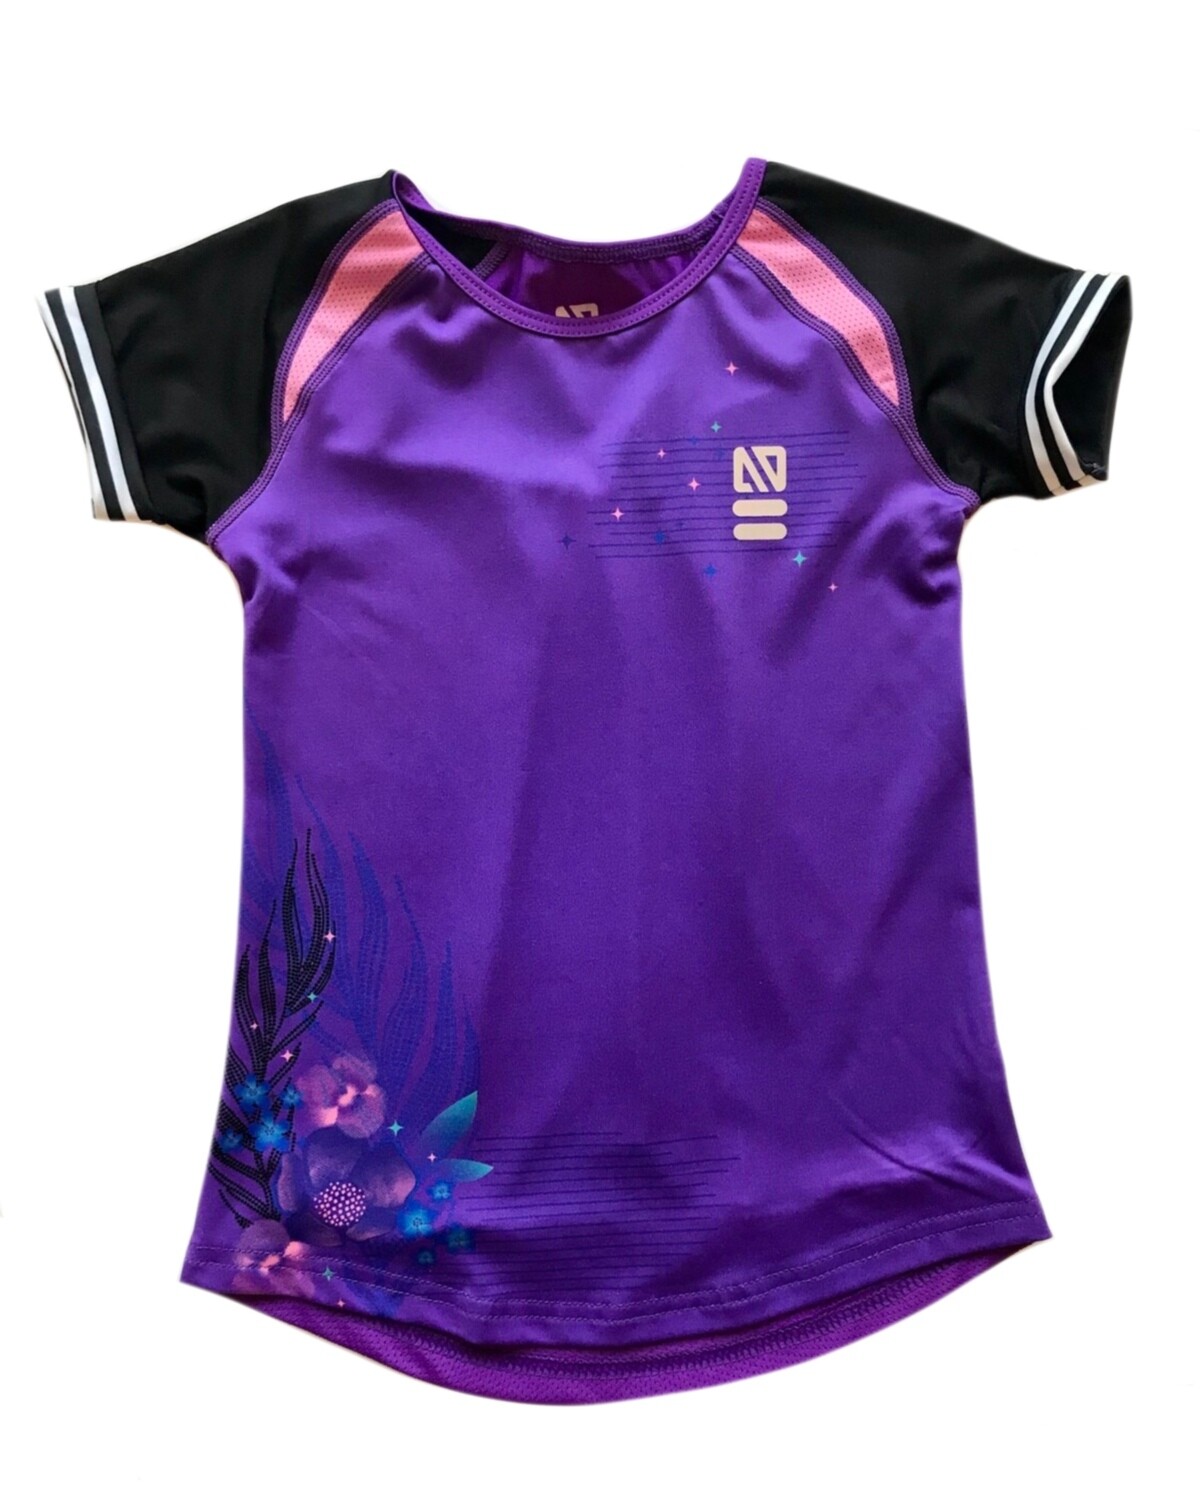 Nano Athletic Top - Black and Purple